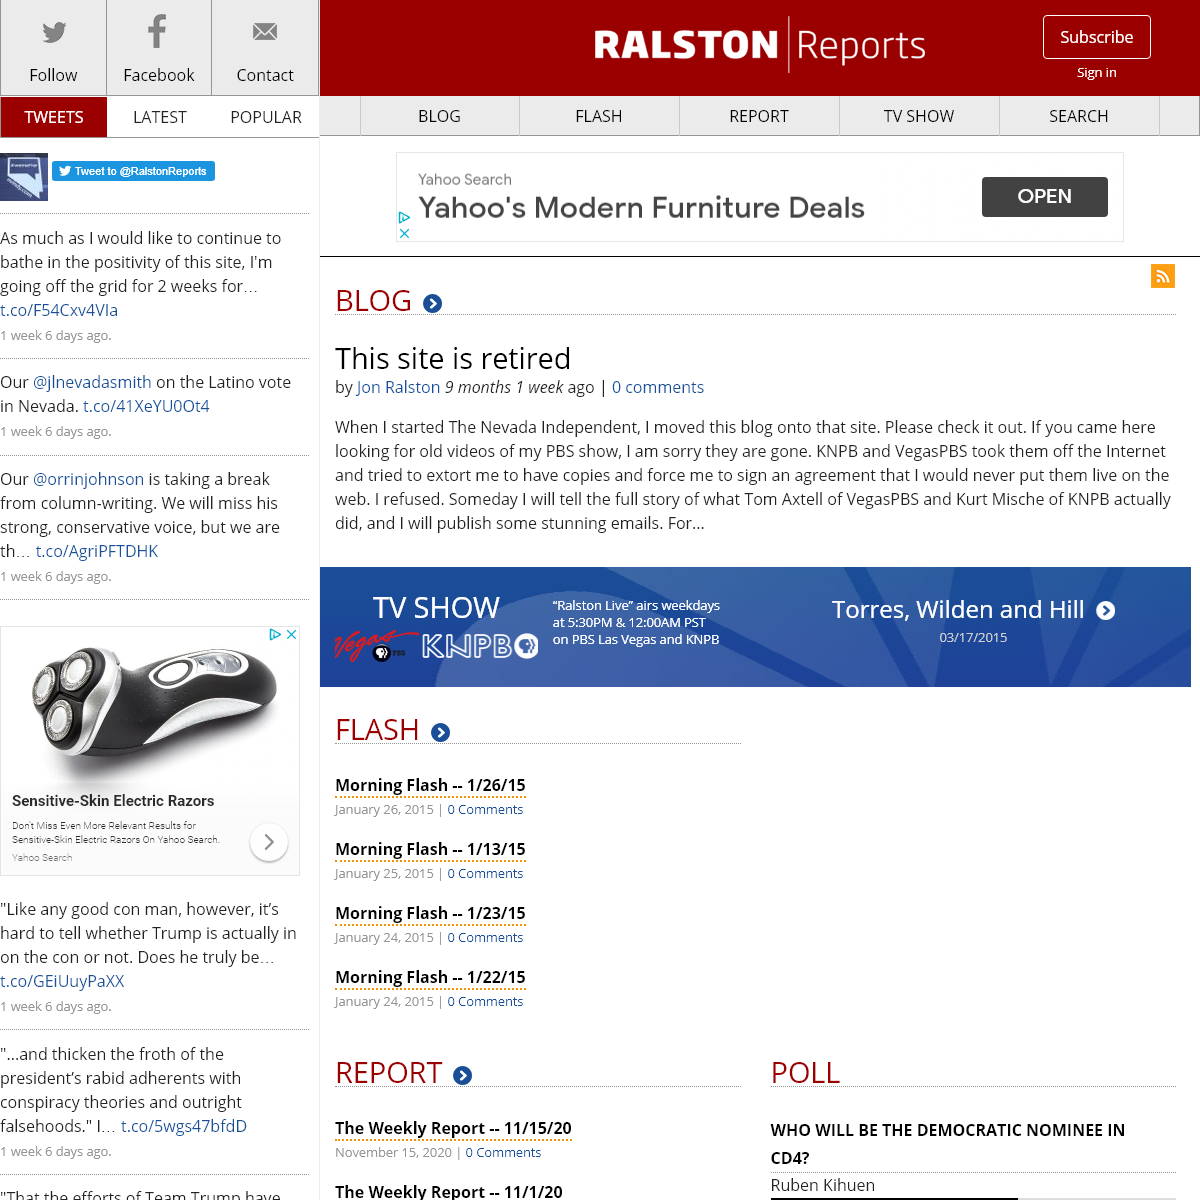 A complete backup of ralstonreports.com